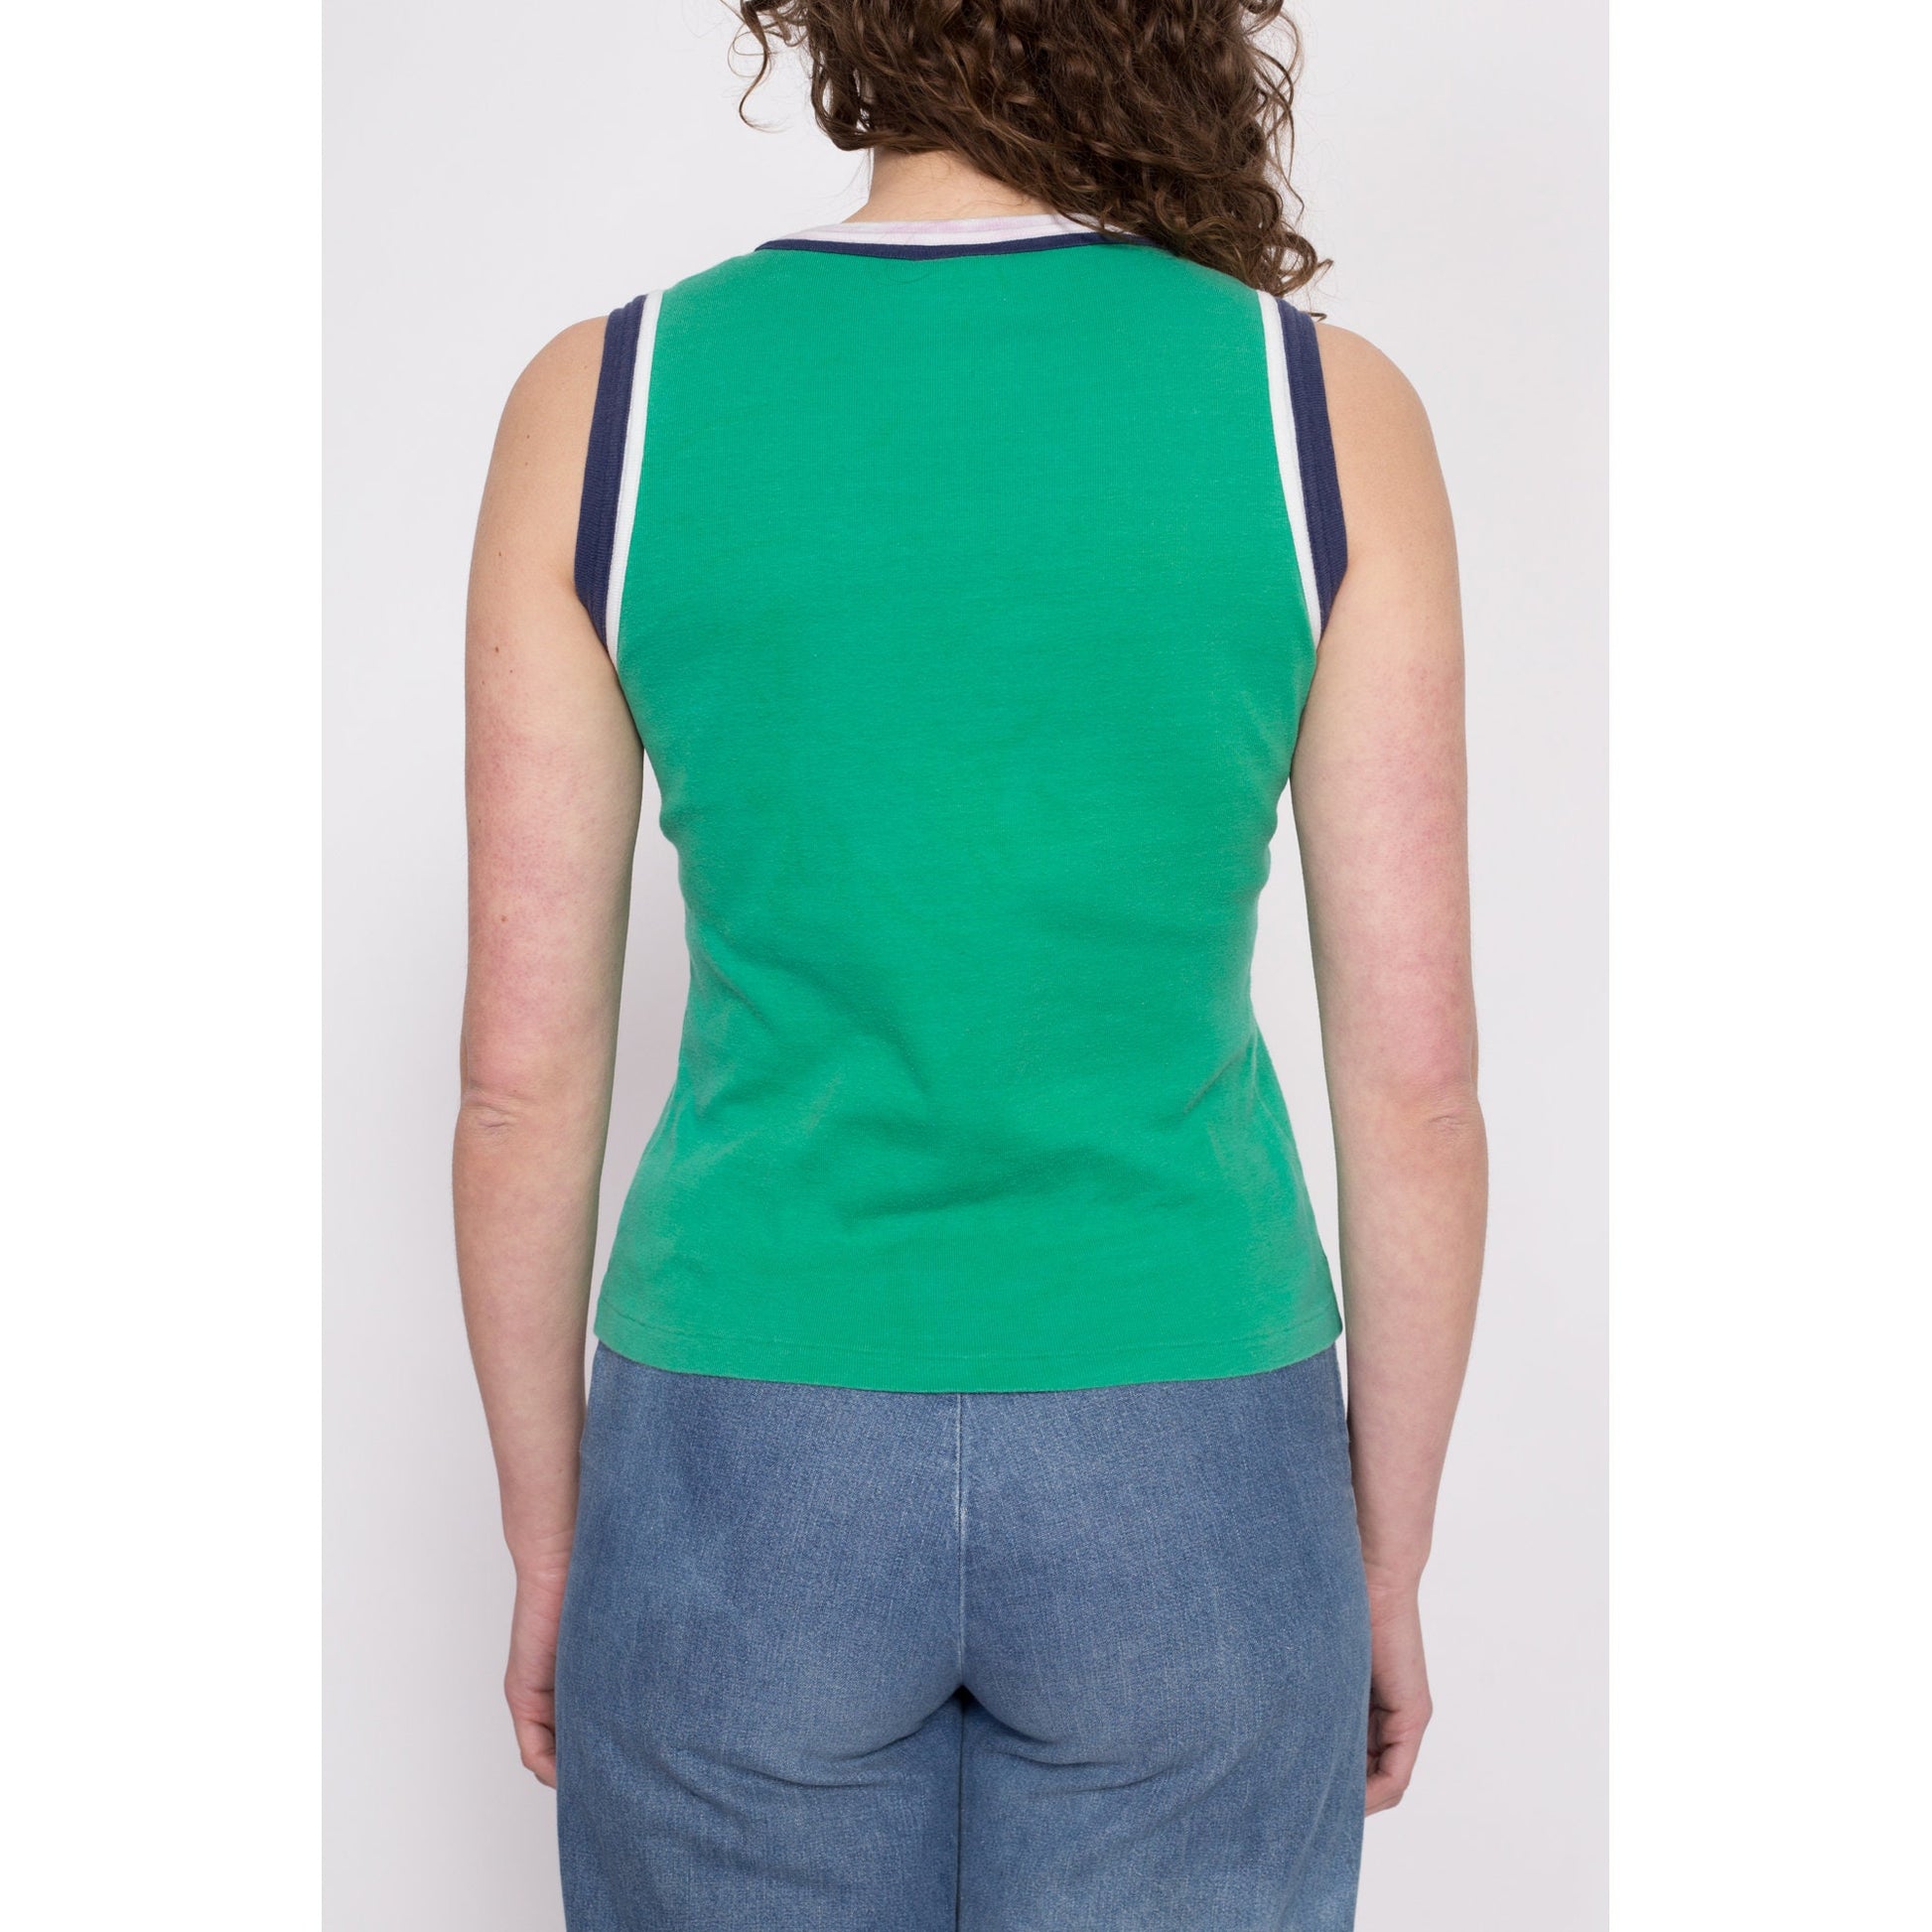 70s Green Ringer Tank - Medium | Vintage Striped Sleeveless Shirt